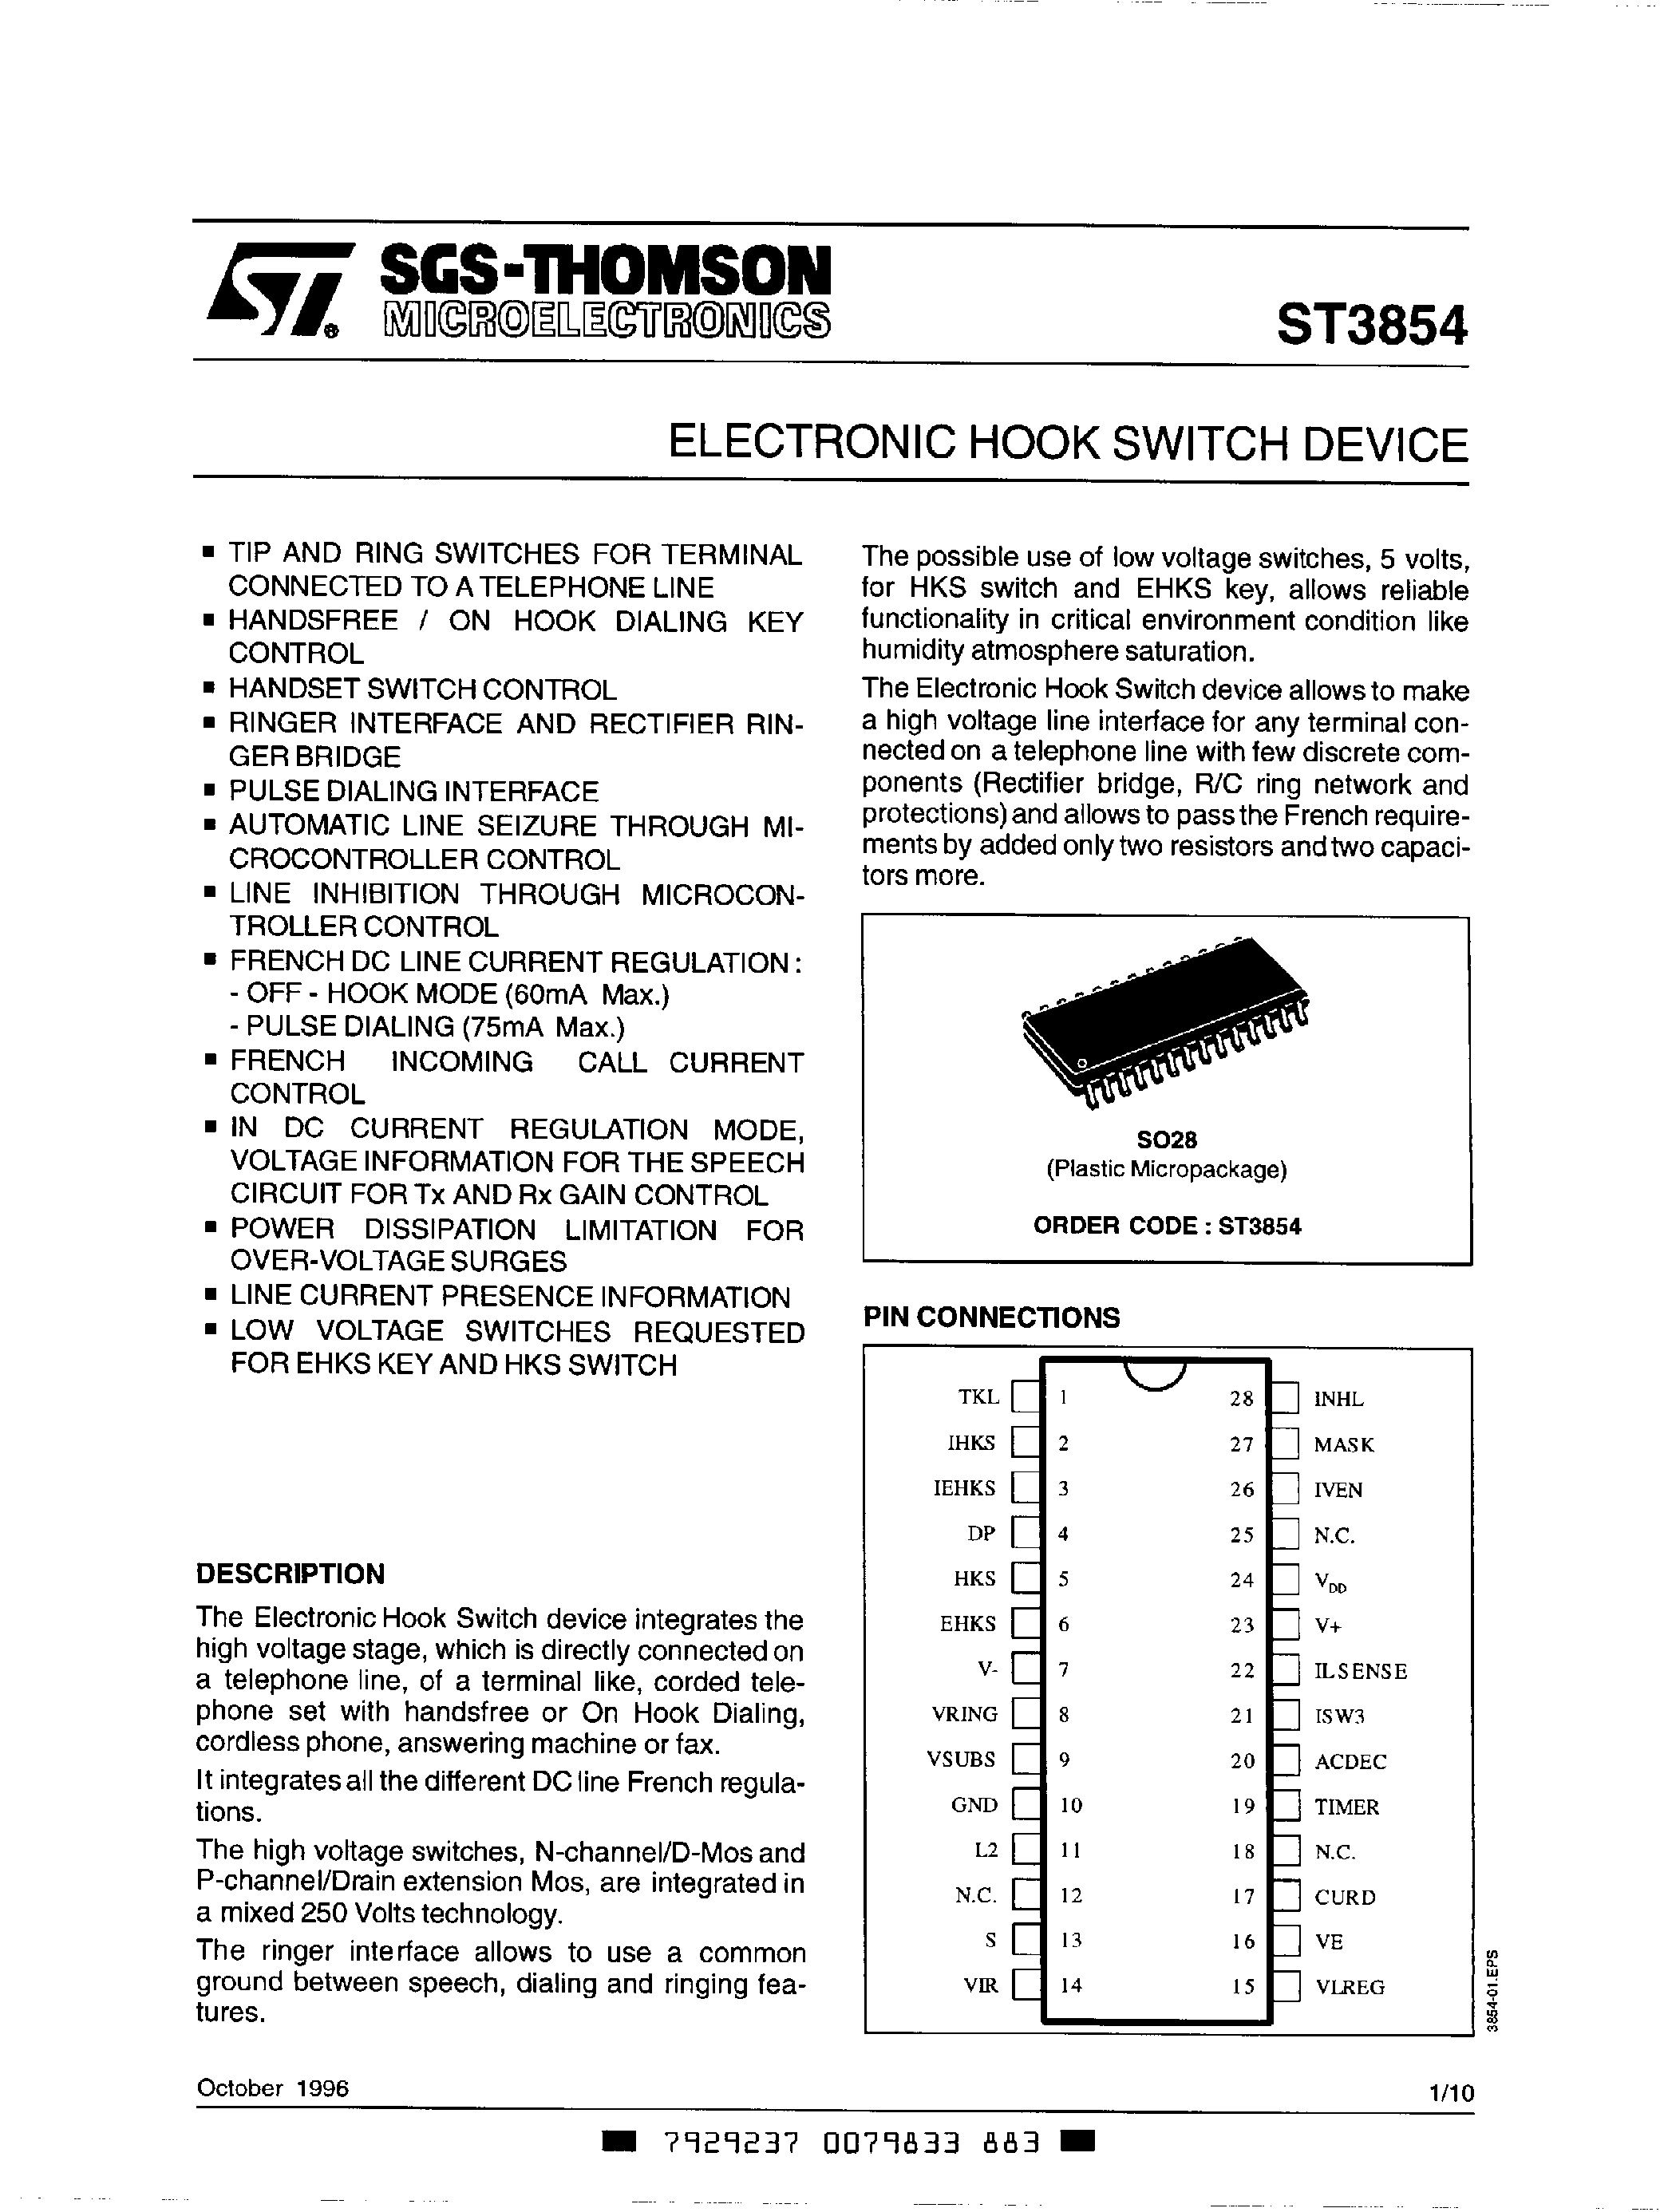 Datasheet ST3854 - ELECTRONIC HOOK SWITCH DEVICE page 1